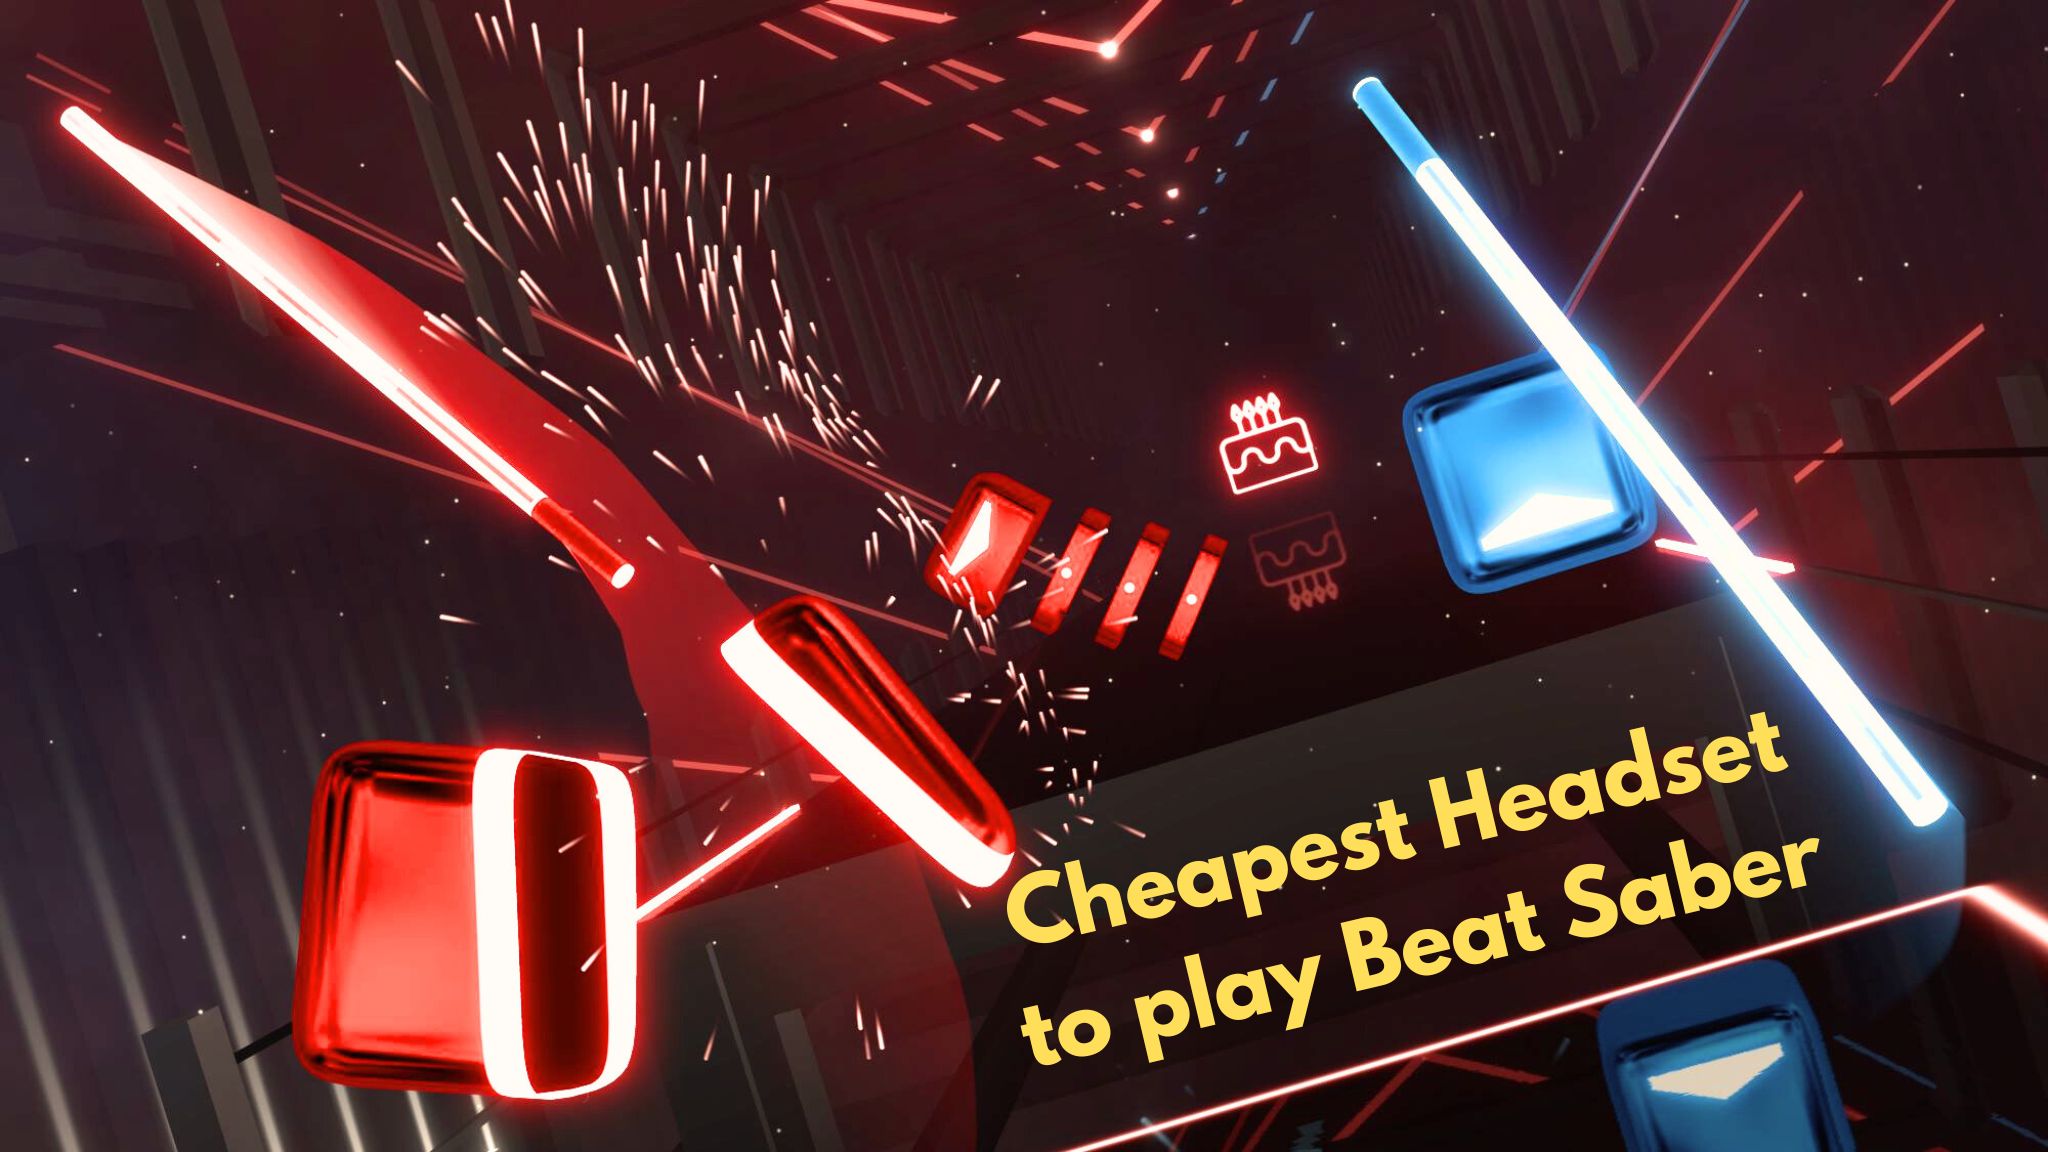 Cheapest VR headset for Beat Saber